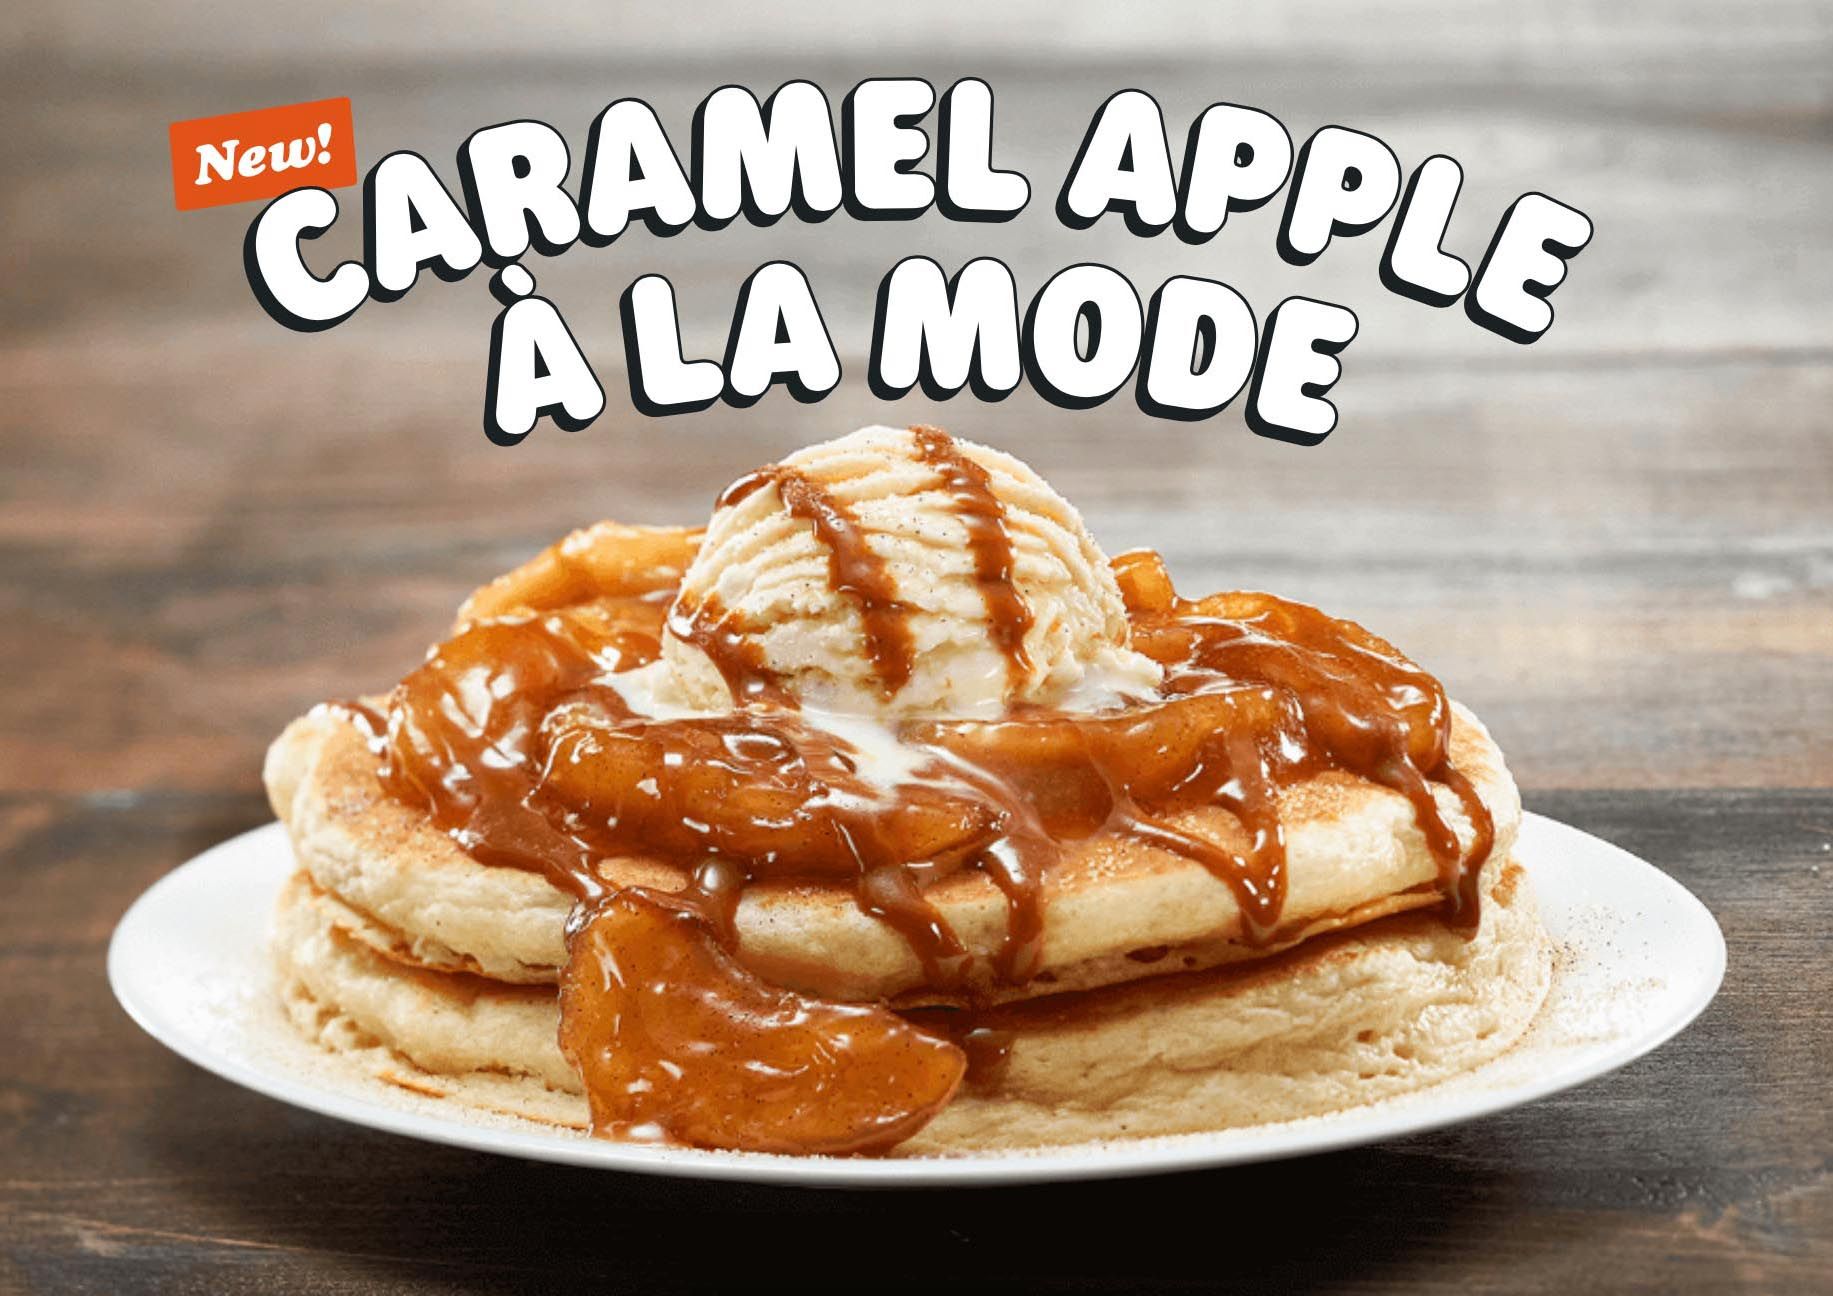 IHOP Rolls Out New Caramel Apple à la Mode Pancakes on Their In-restaurant Menu